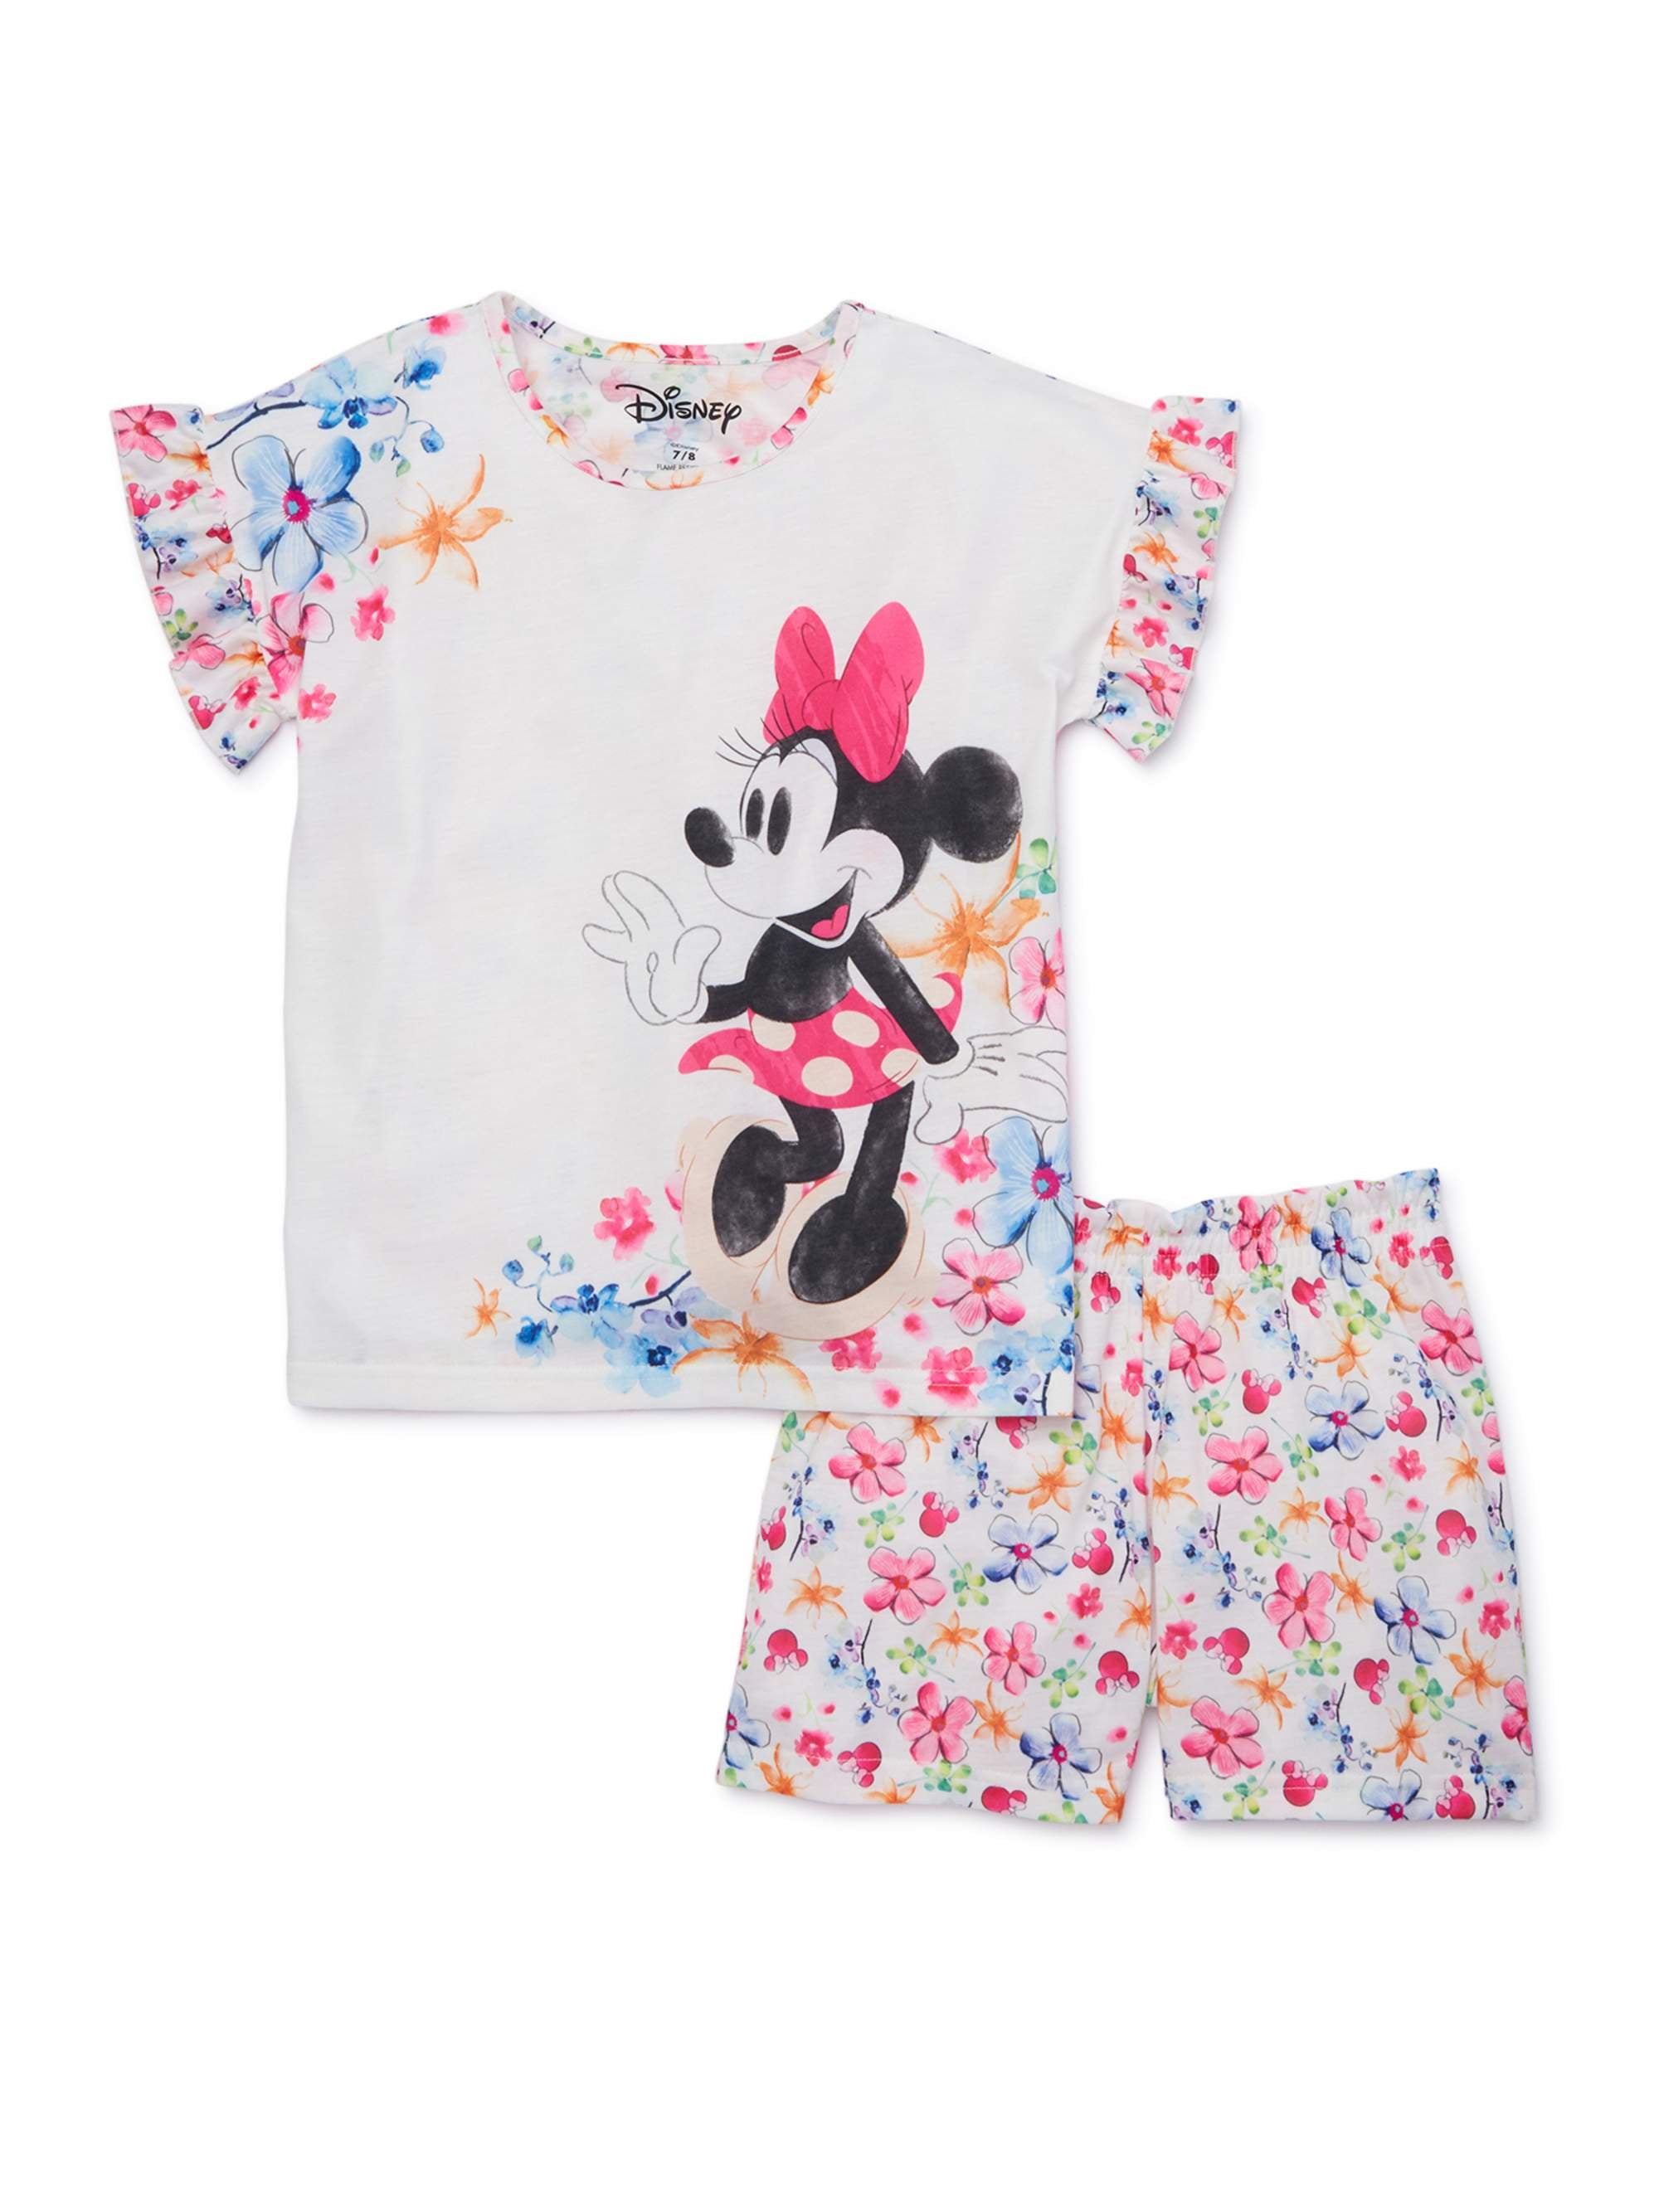 Kids Girls Outfits Minnie Mickey T-Shirts Tops Shorts Pants Sleepwear Pajamas